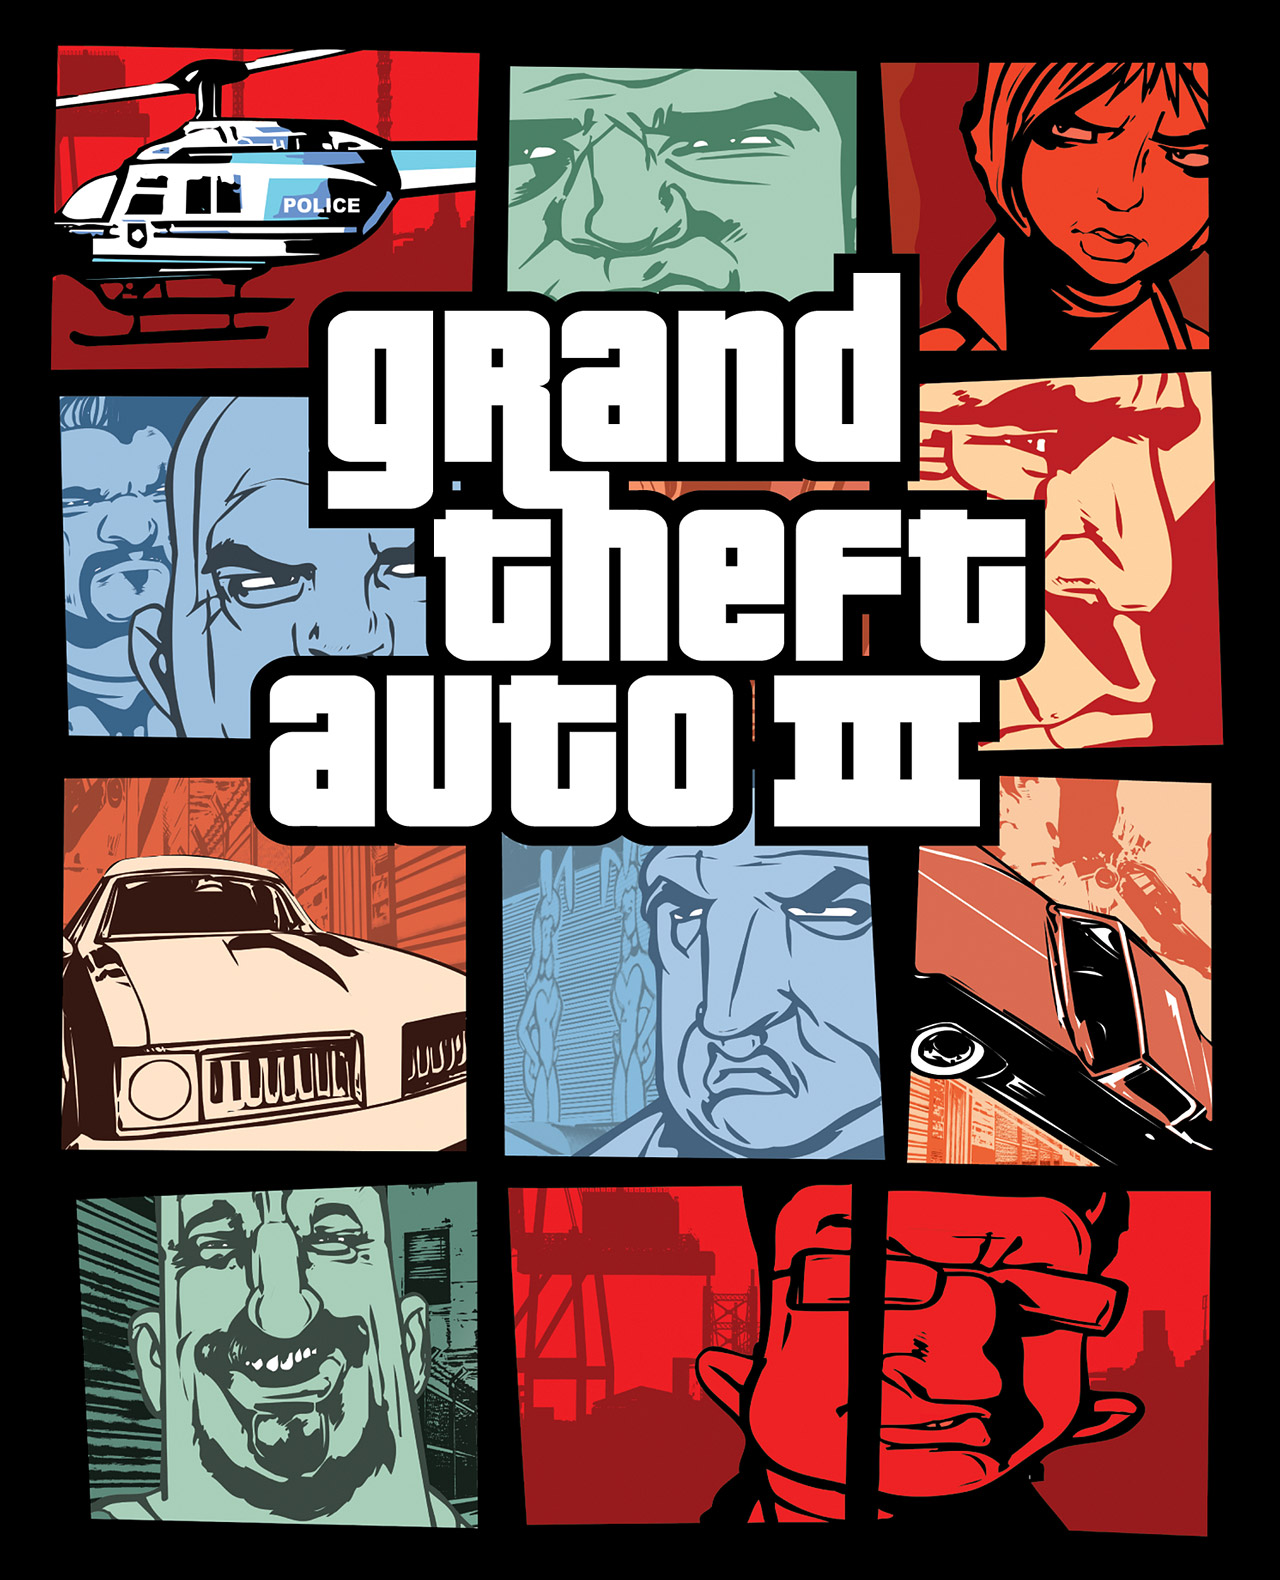 Grand Theft Auto: San Andreas AO Version PlayStation 2 2004 Used Free US  Ship